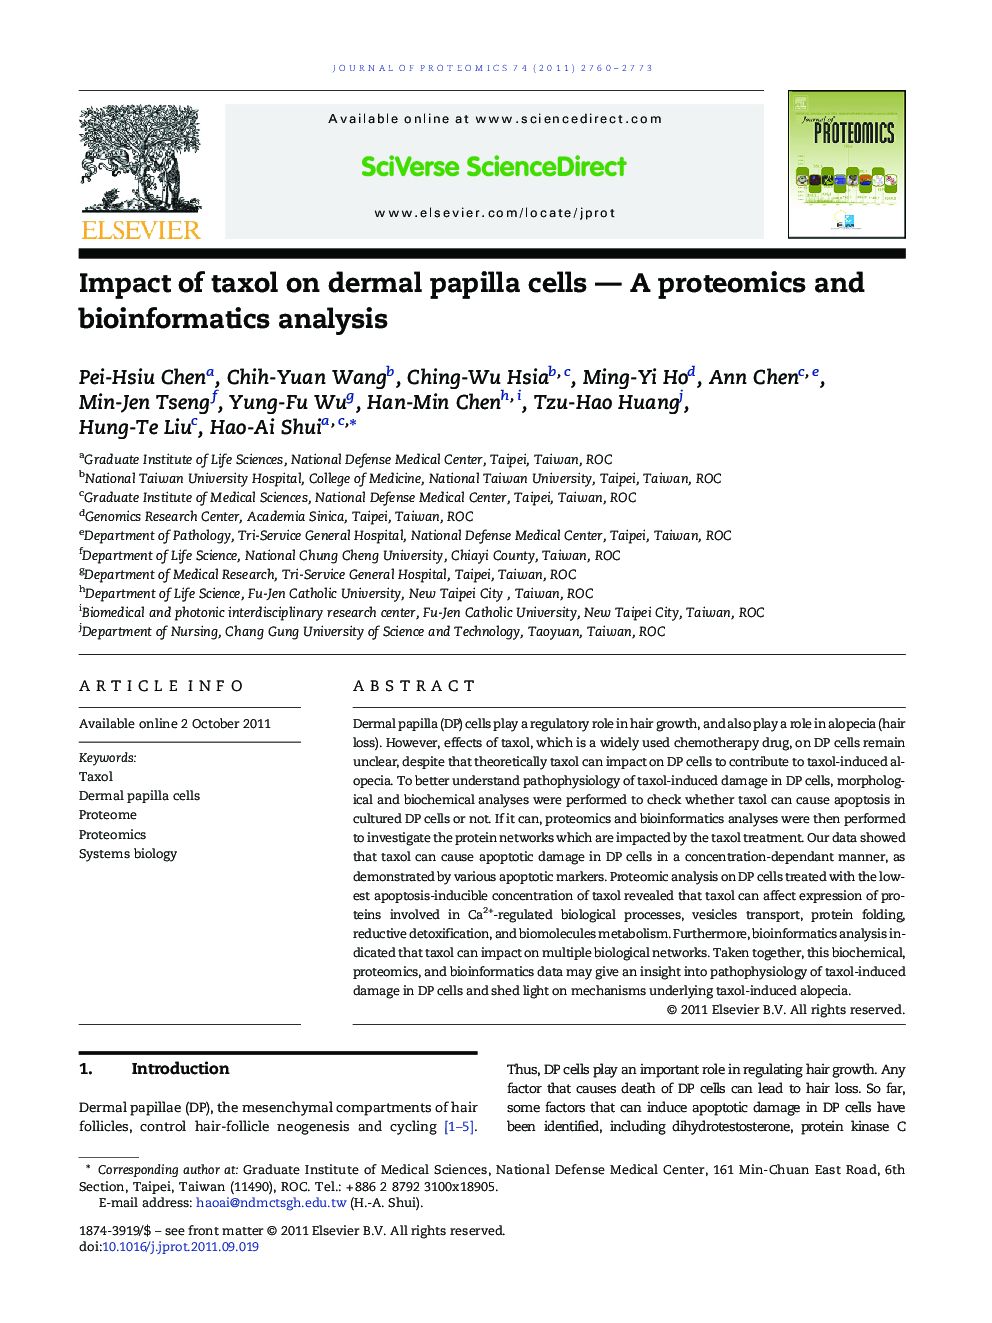 Impact of taxol on dermal papilla cells - A proteomics and bioinformatics analysis